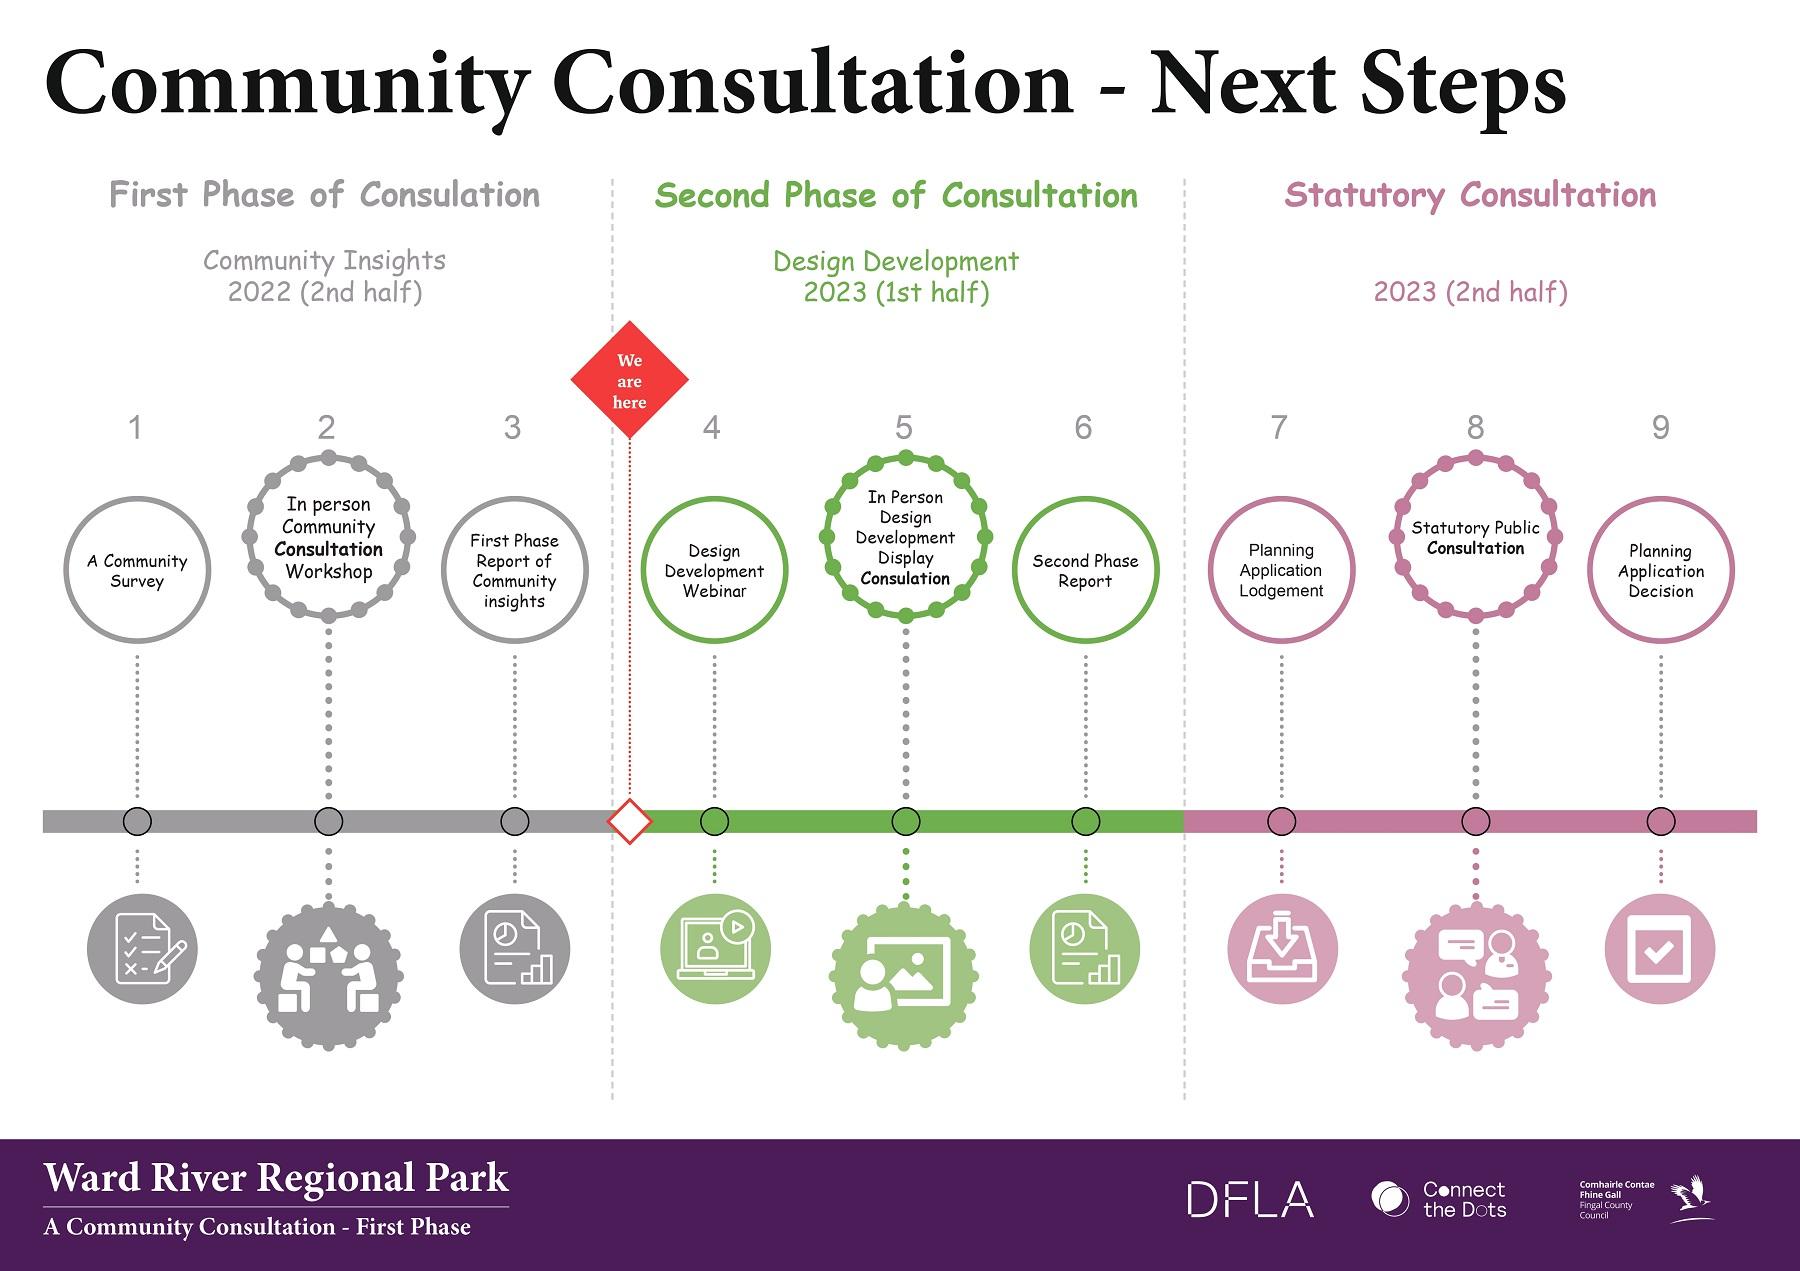 Next steps timeline for community views on Ward River